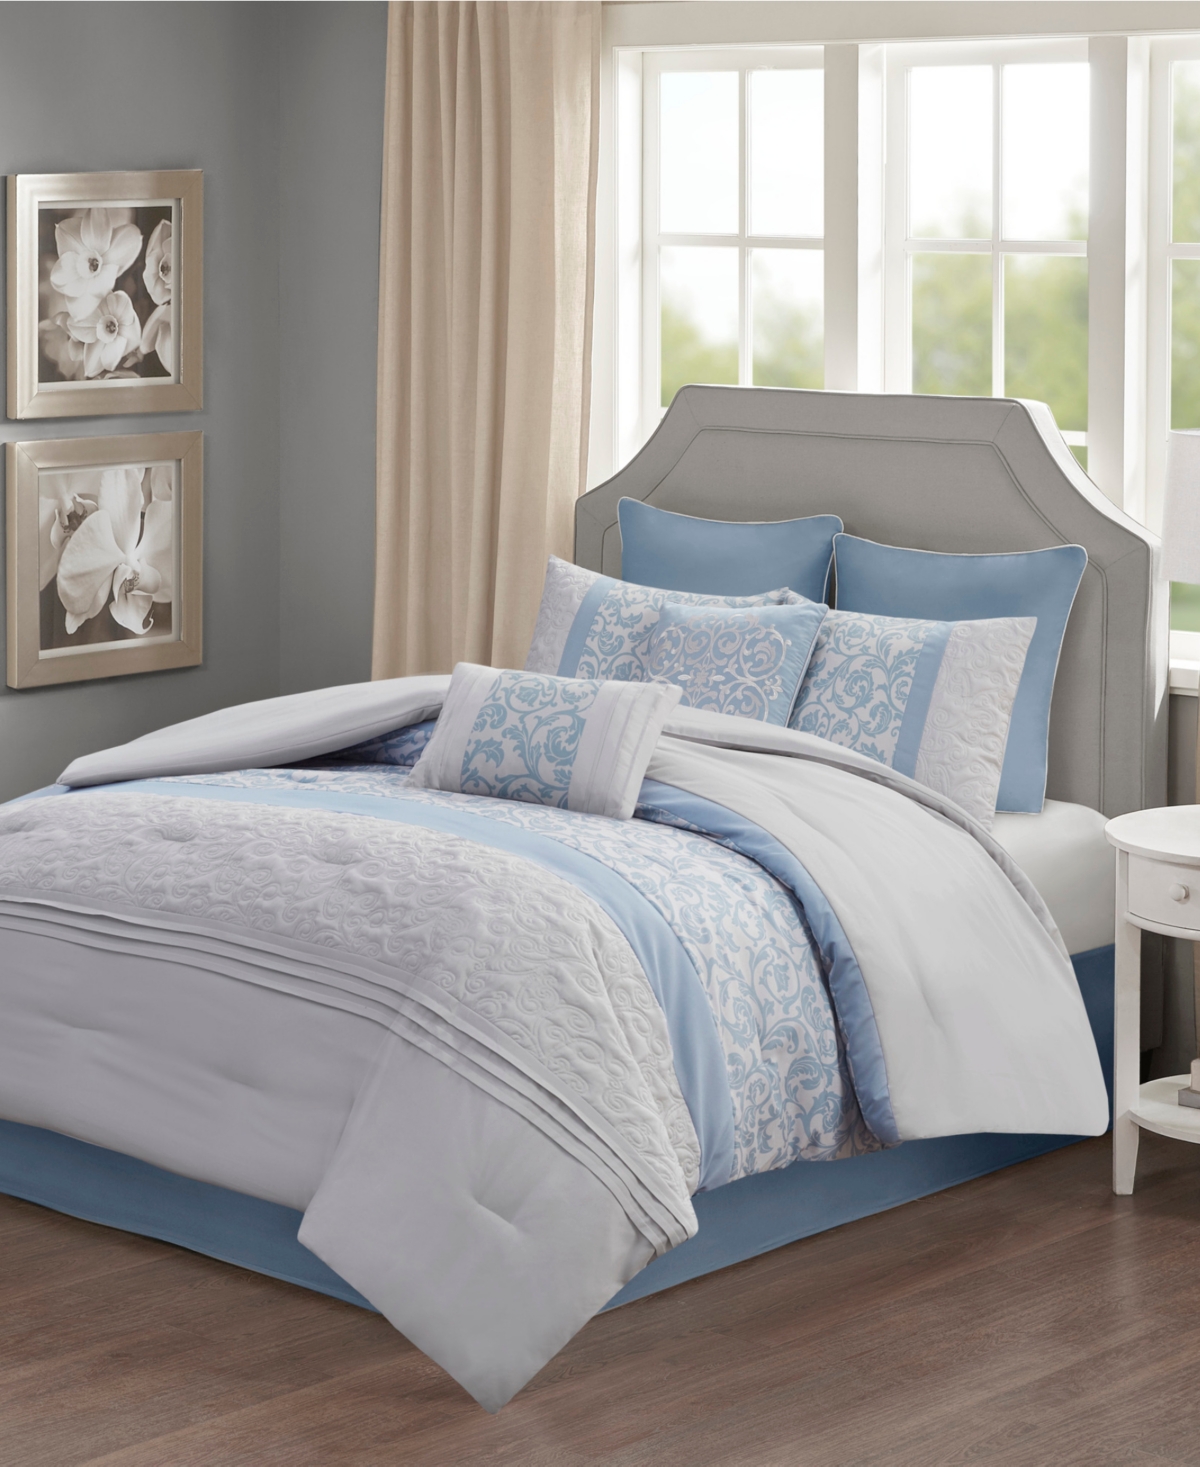 510 Design Ramsey Queen Embroidered 8 Piece Comforter Set Bedding In Blue